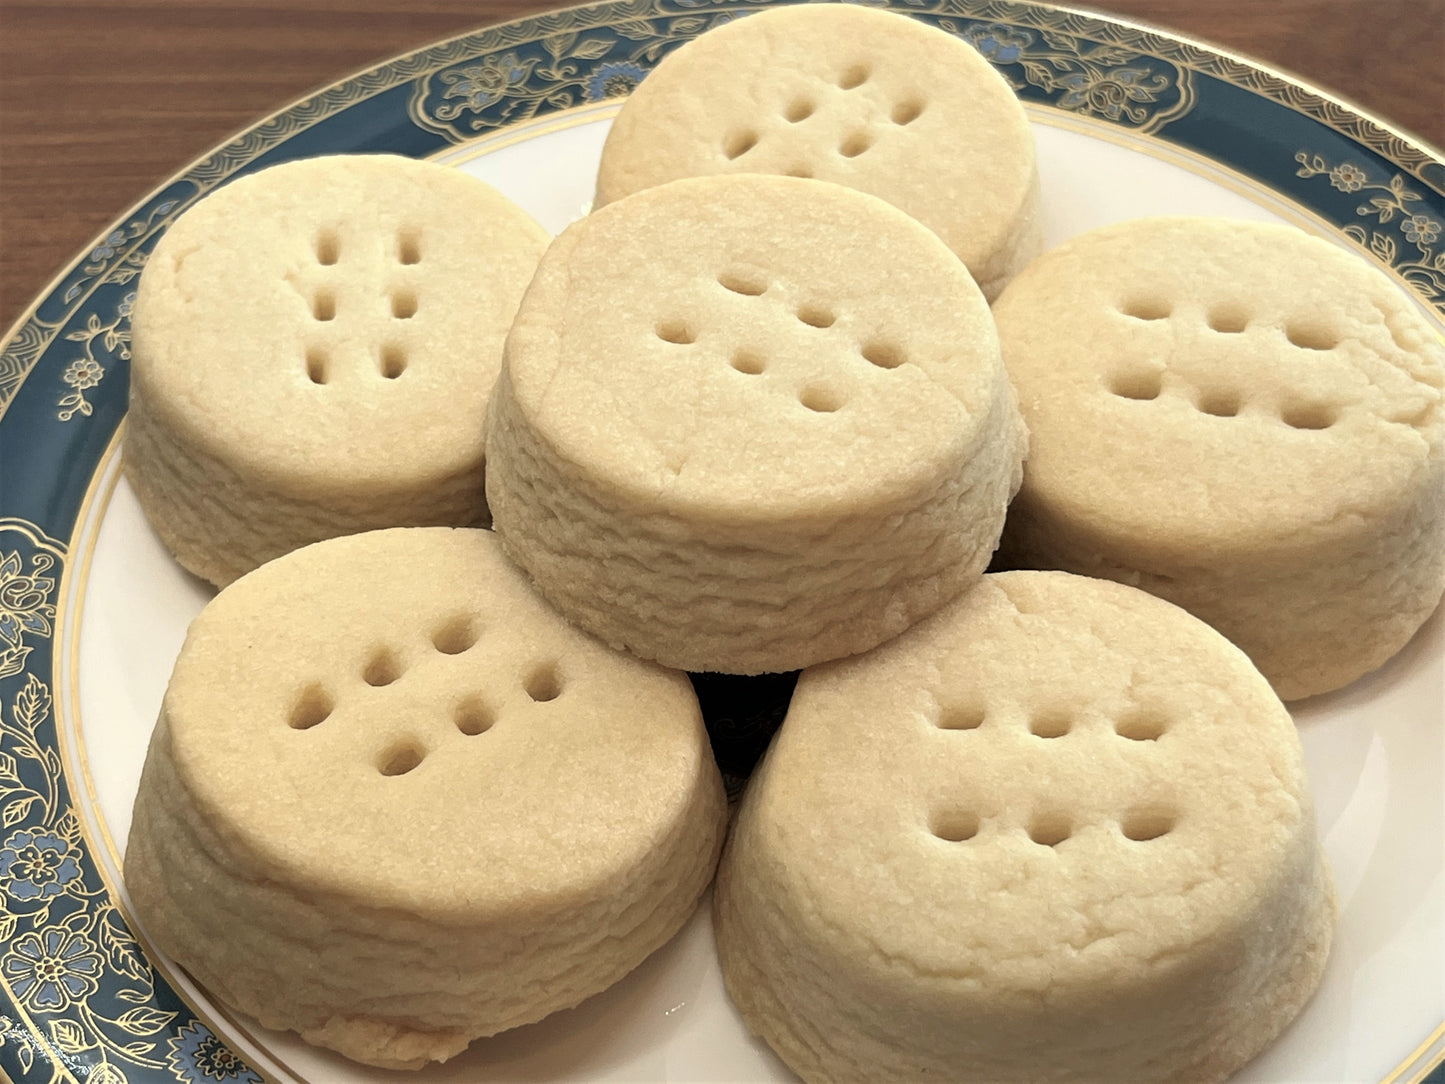 1. Original Shortbread Cookies - 12 cookies